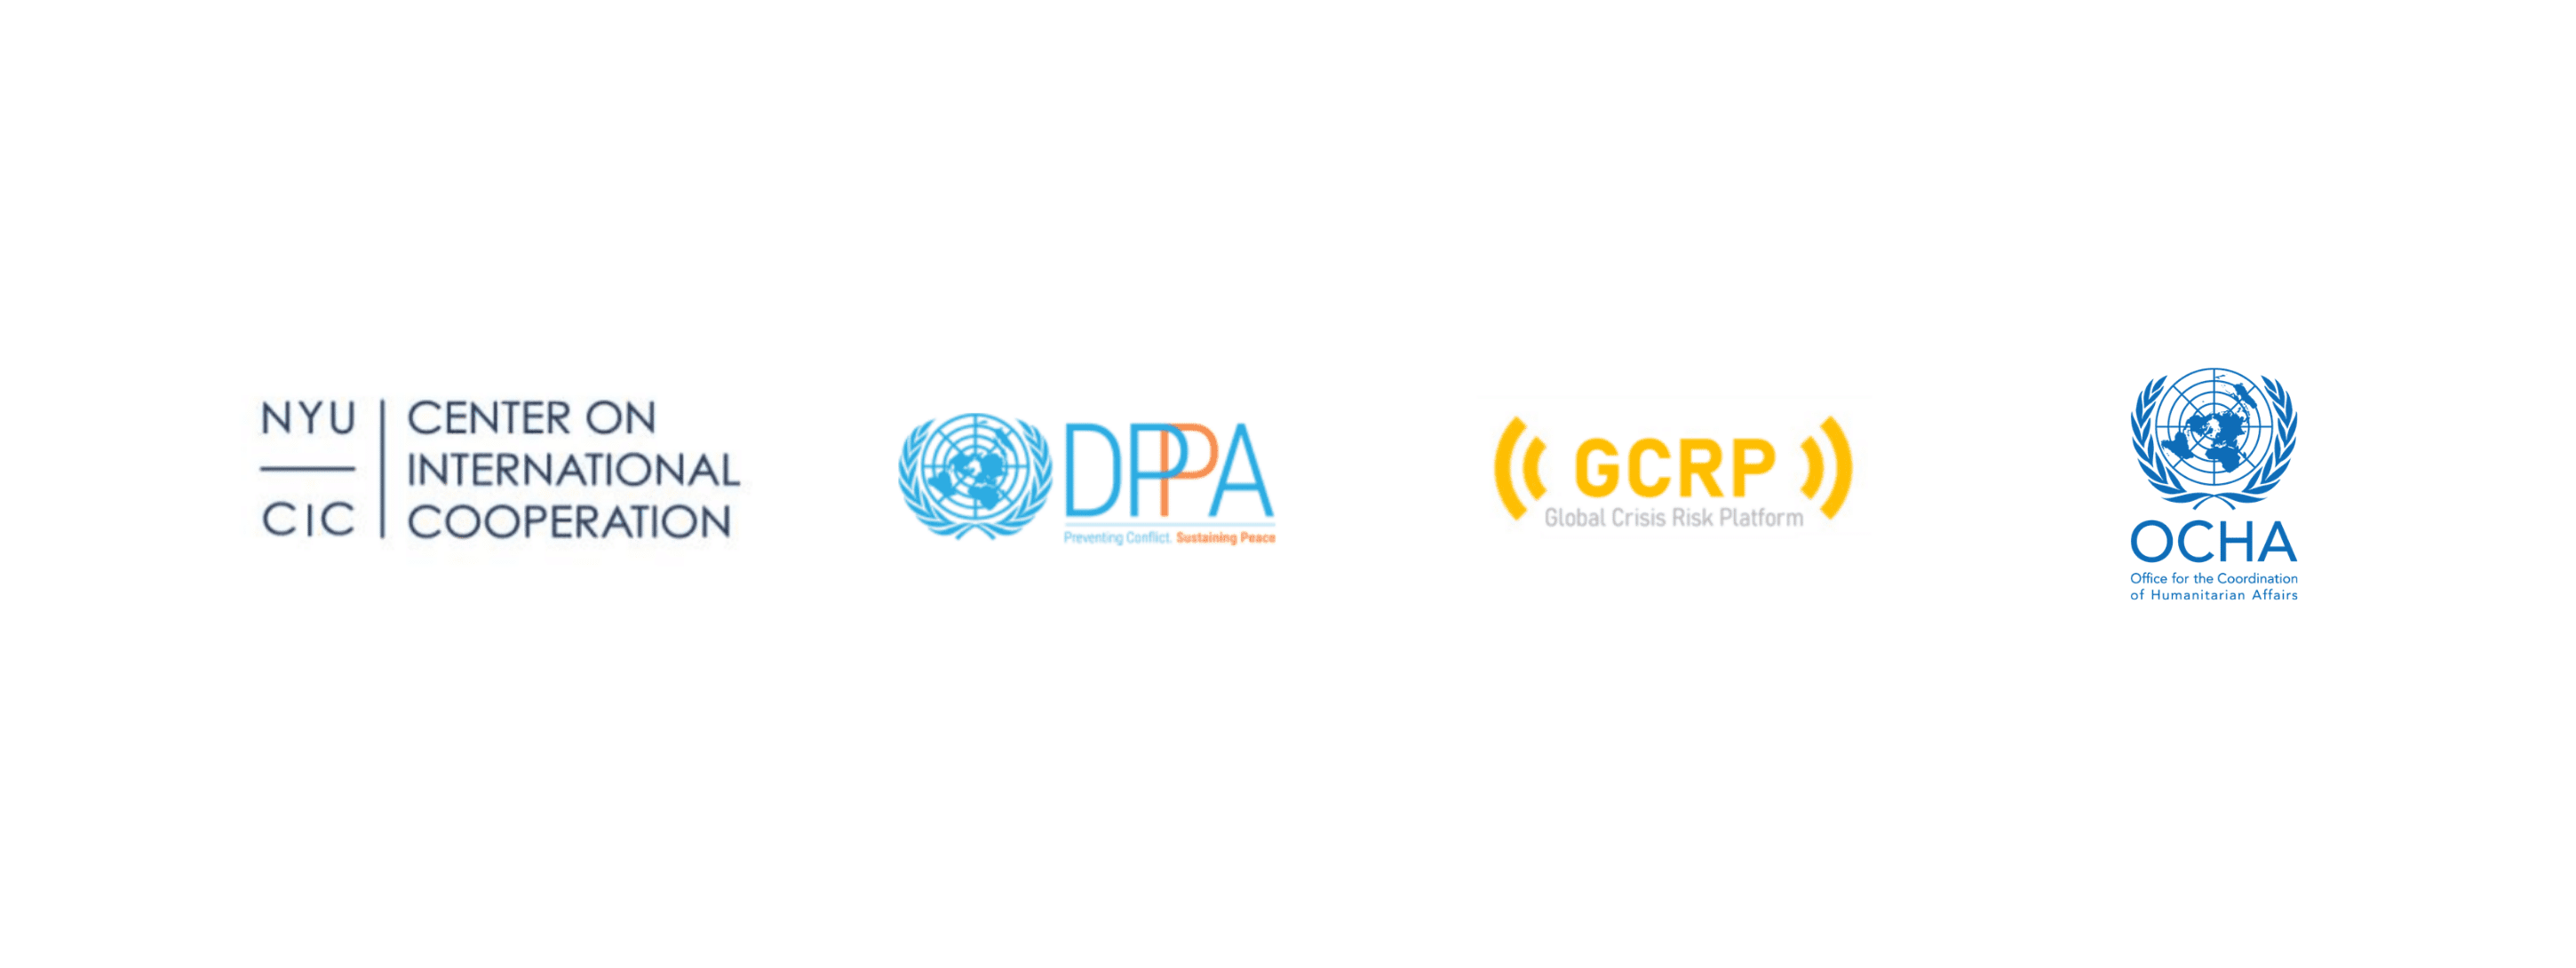 Logos for CIC, DPPA, GCRP, and OCHA